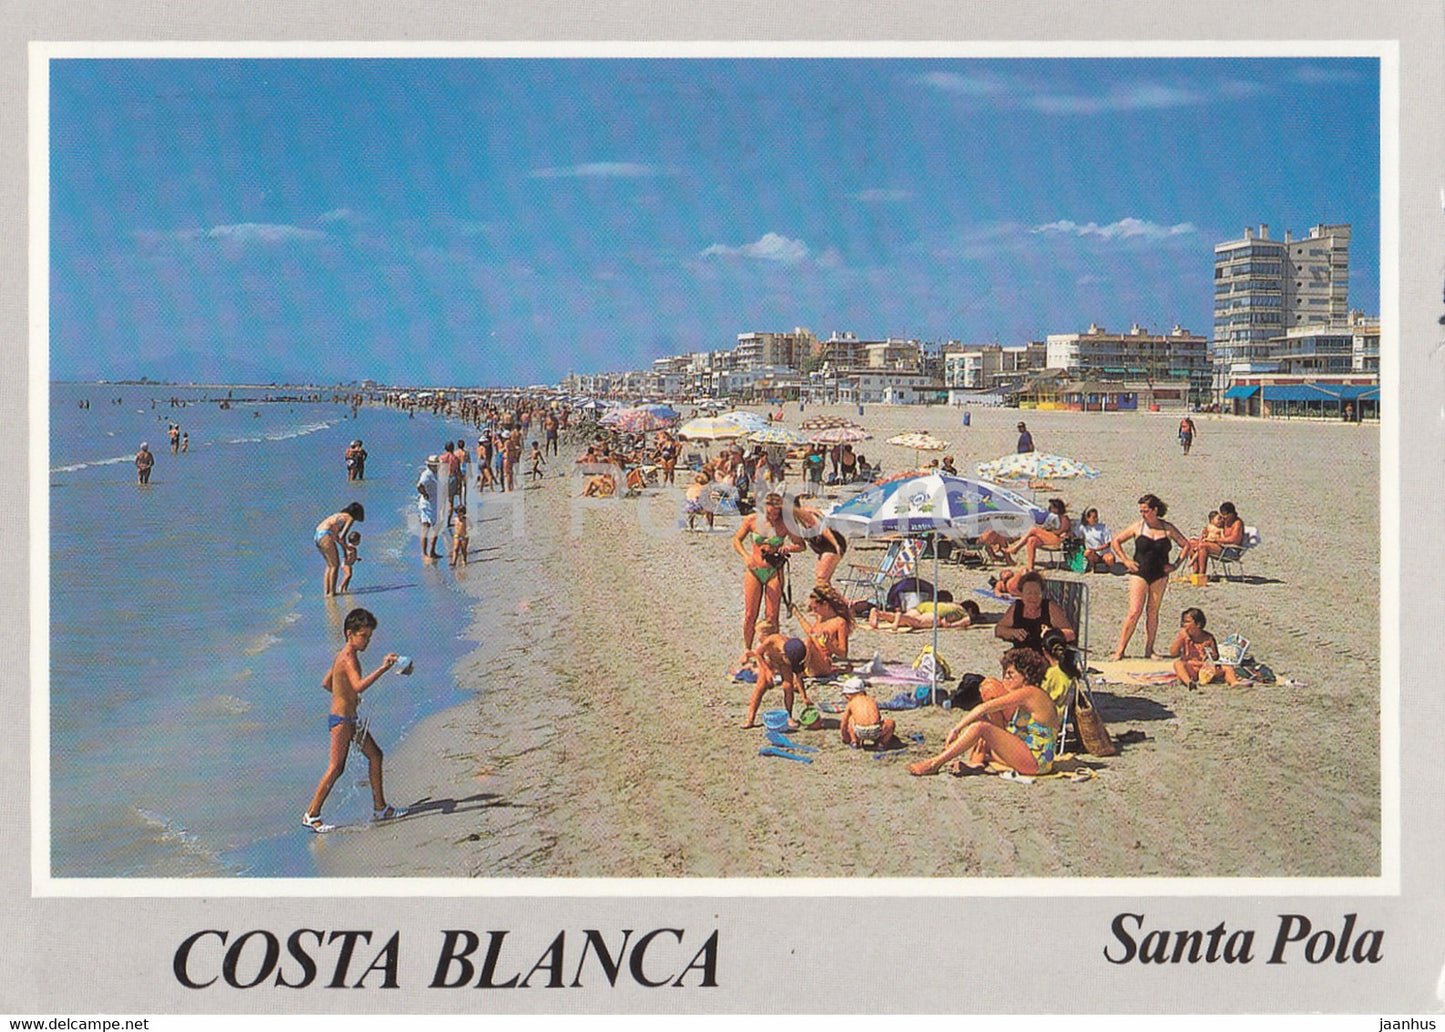 Costa Blanca - Santa Pola - Playa Lissa - Lissa beach - 1999 - Spain - used - JH Postcards